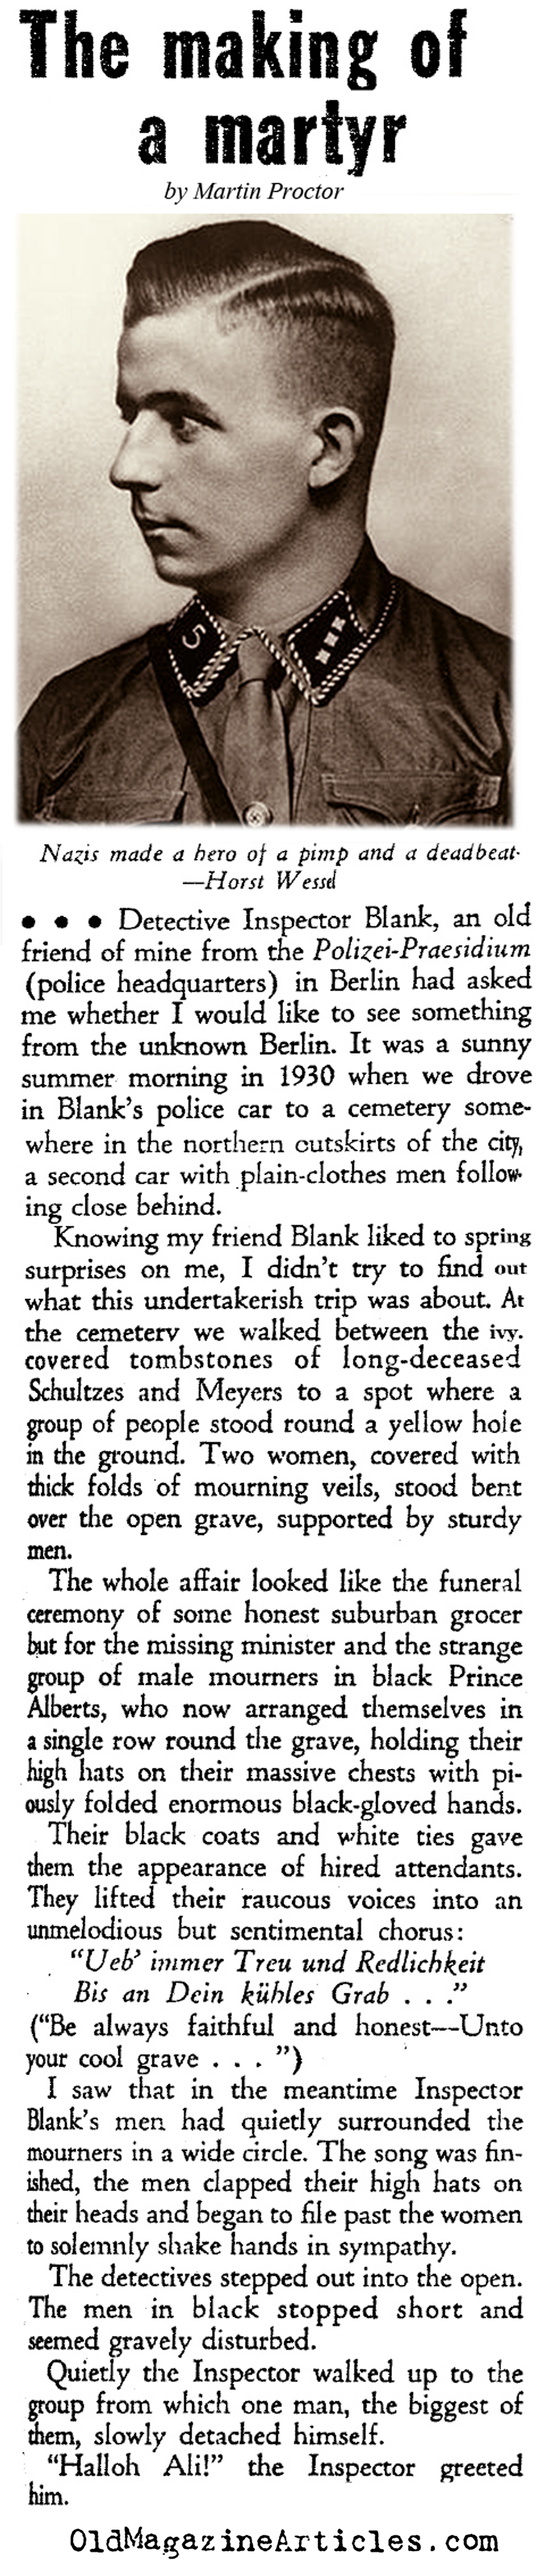 Horst Wessel: Nazi Martyr (Ken Magazine, 1939)